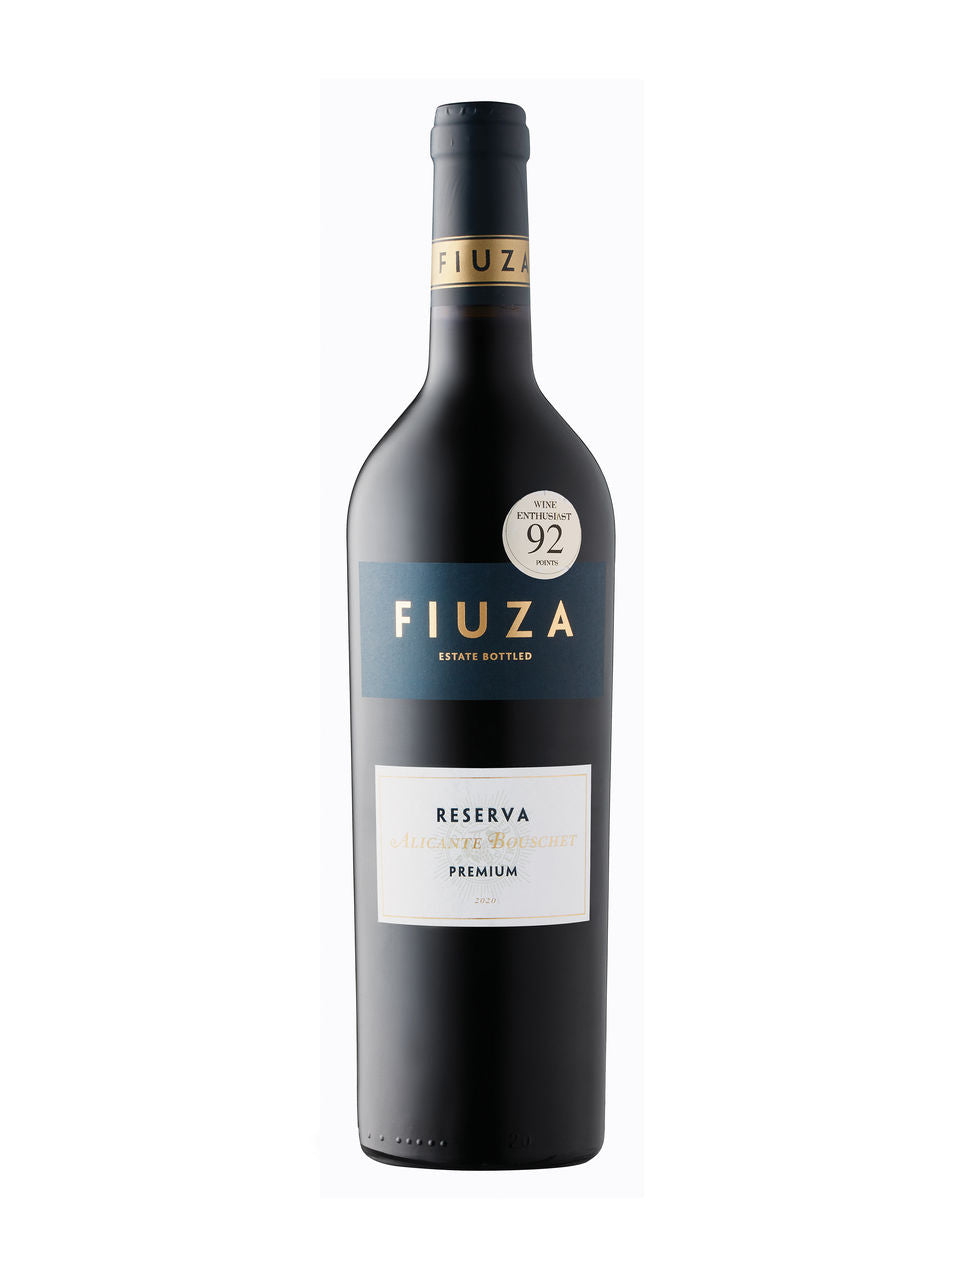 Fiuza Premium Reserva Alicante Bouschet 2020 750 mL bottle  VINTAGES